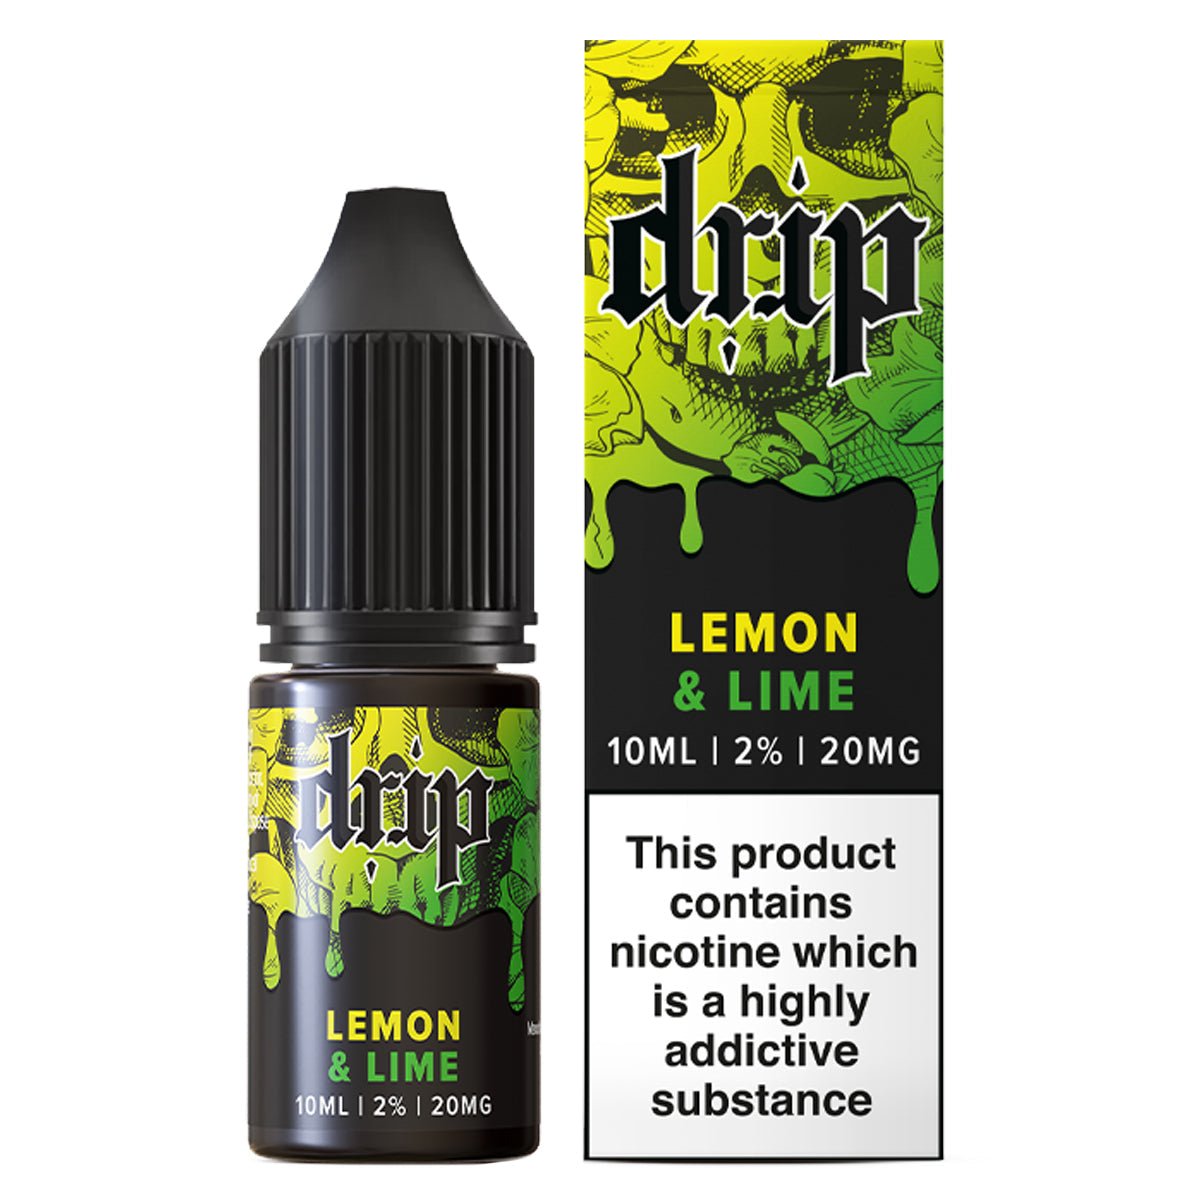 Lemon & Lime 10ml Nic Salt By Drip - Manabush Eliquid - Tobacco E-liquid and Vape Juice